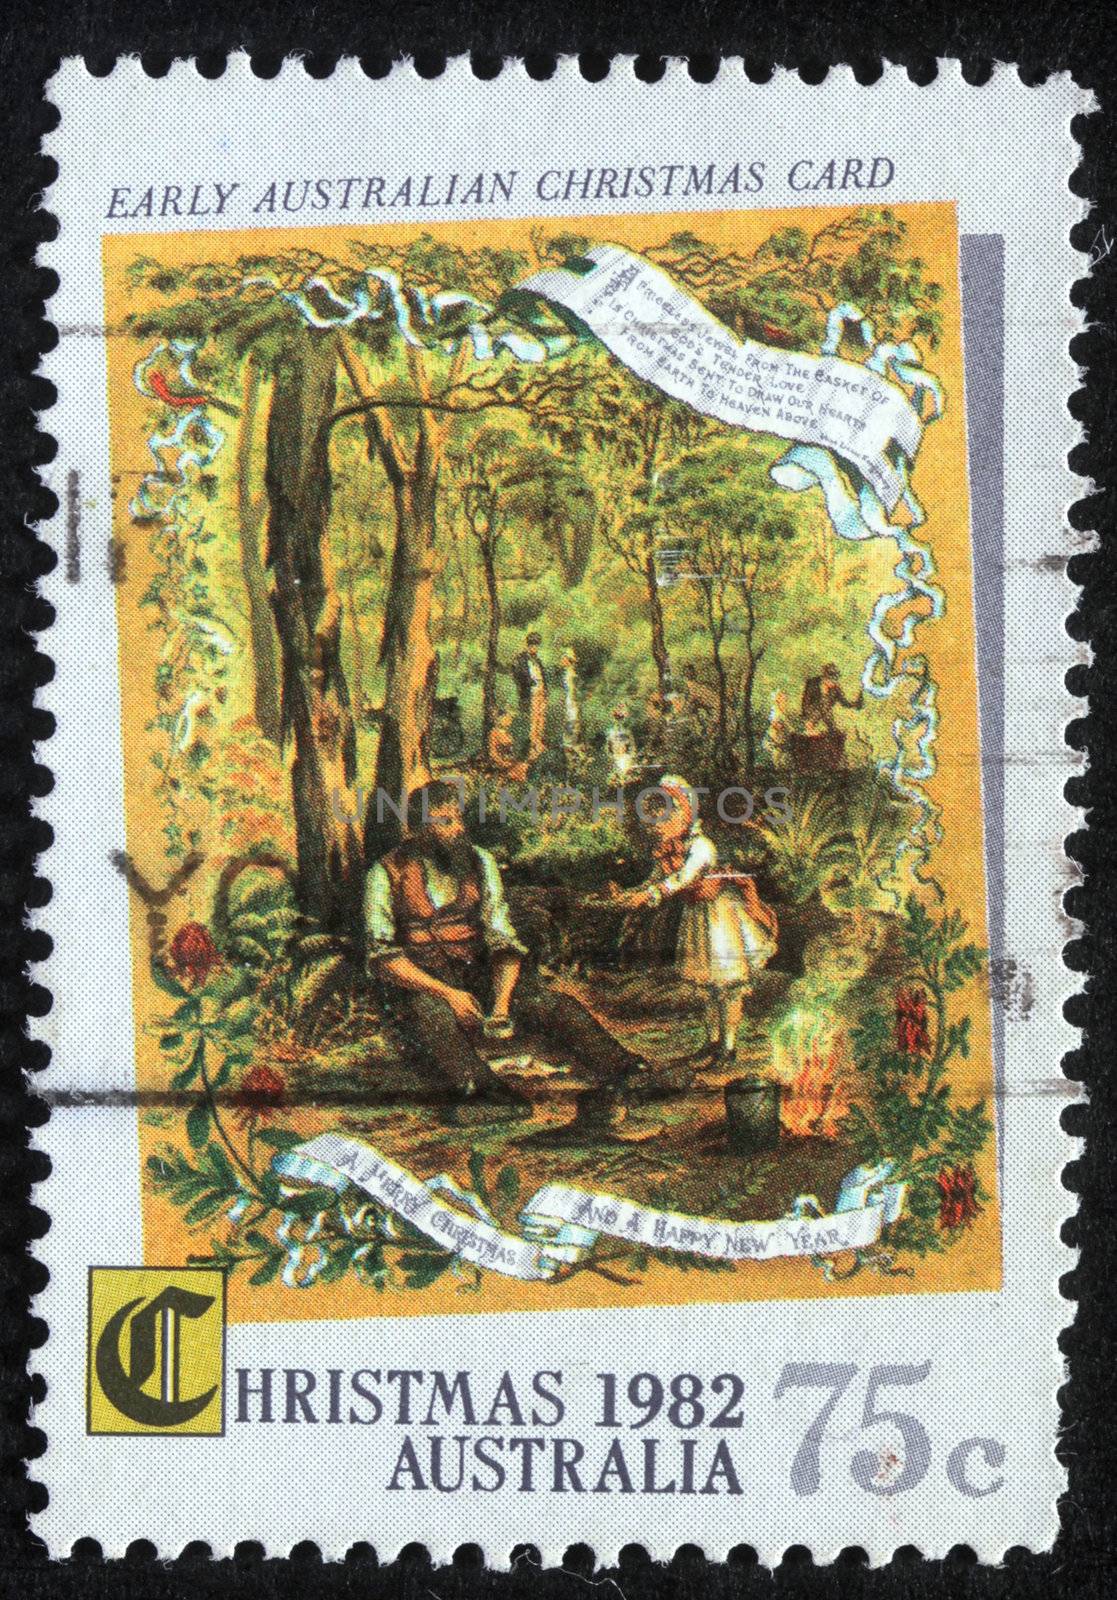 AUSTRALIA - CIRCA 1982 : A greeting Christmas stamp printed in Australia